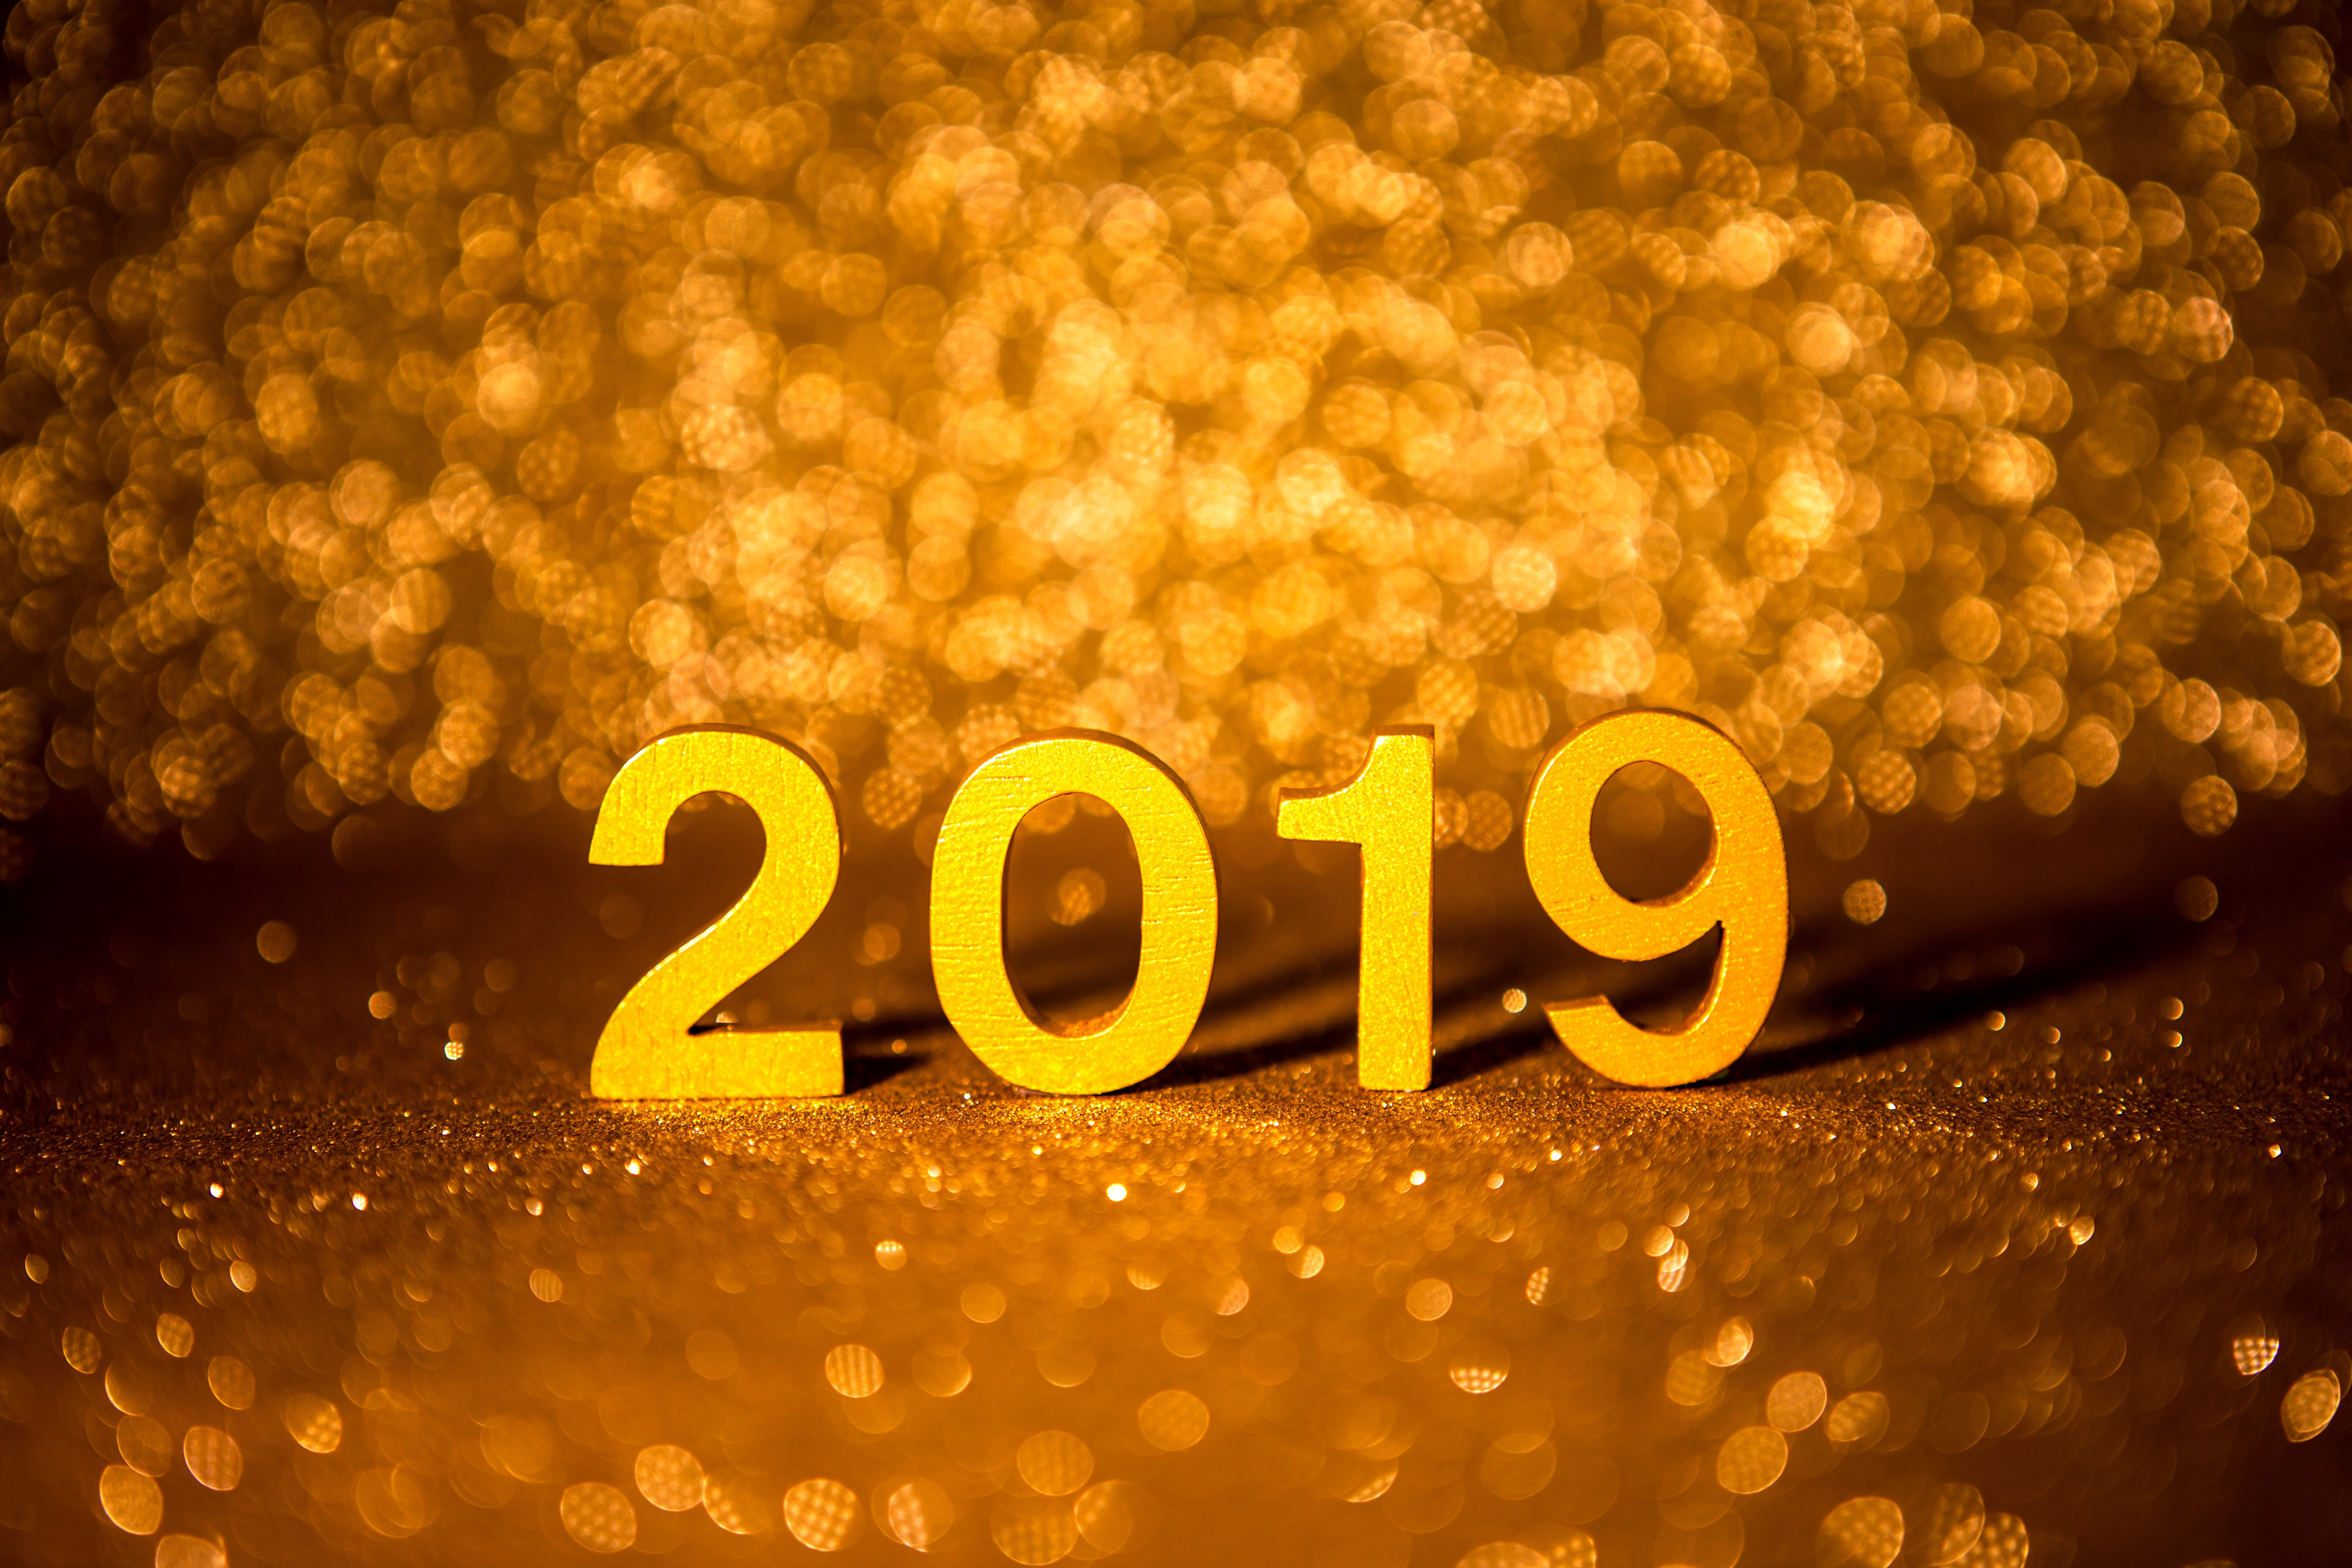 New Year 2019 4k Ultra HD Wallpaper. 